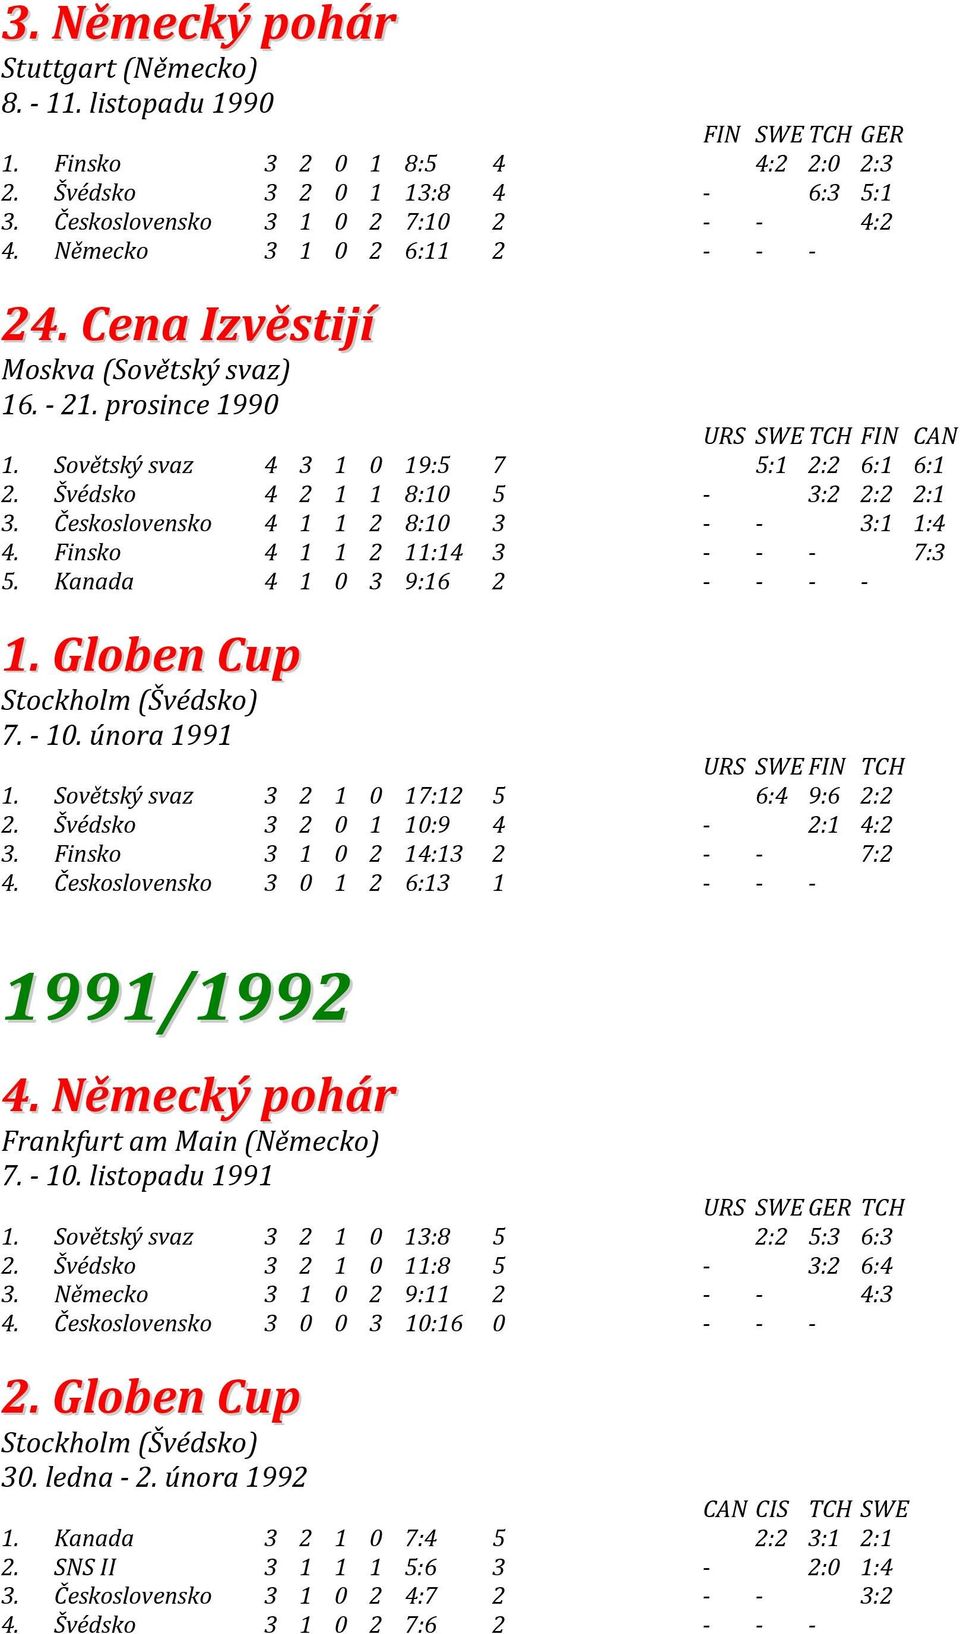 Československo 4 1 1 2 8:10 3 - - 3:1 1:4 4. Finsko 4 1 1 2 11:14 3 - - - 7:3 5. Kanada 4 1 0 3 9:16 2 - - - - 1. Globen Cup Stockholm (Švédsko) 7. - 10. února 1991 URS SWE FIN TCH 1.